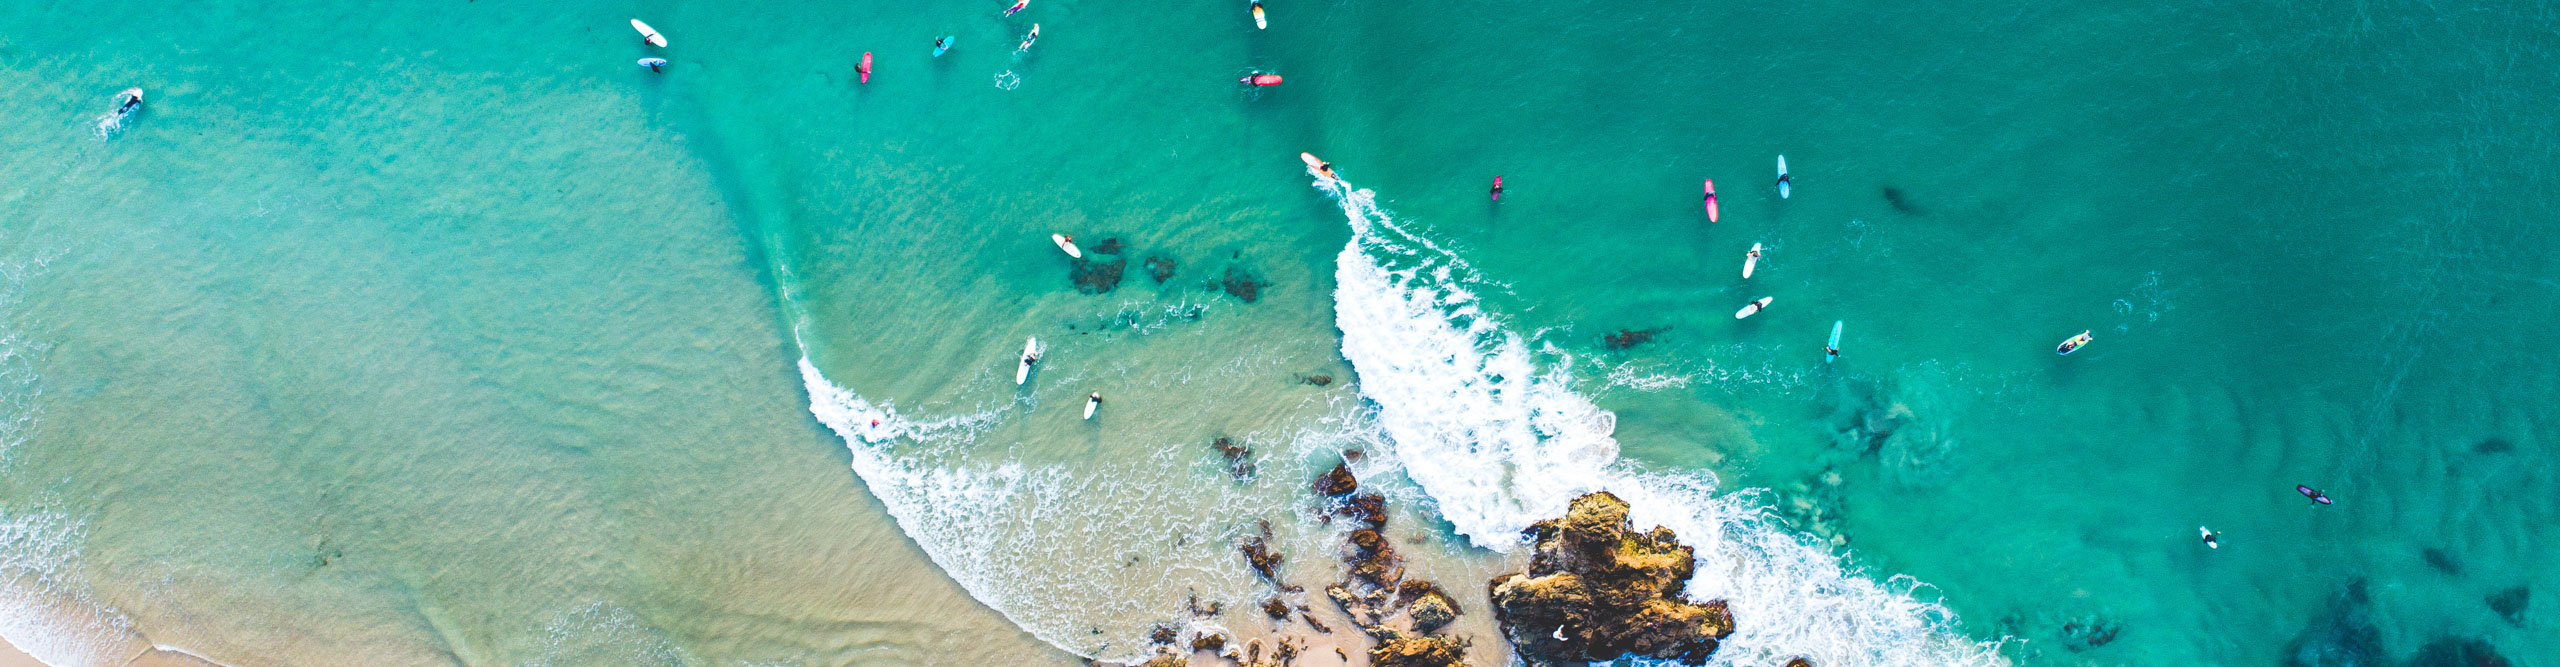 Aerial view of surfers in the water in Noosa, Queensland, Australia 